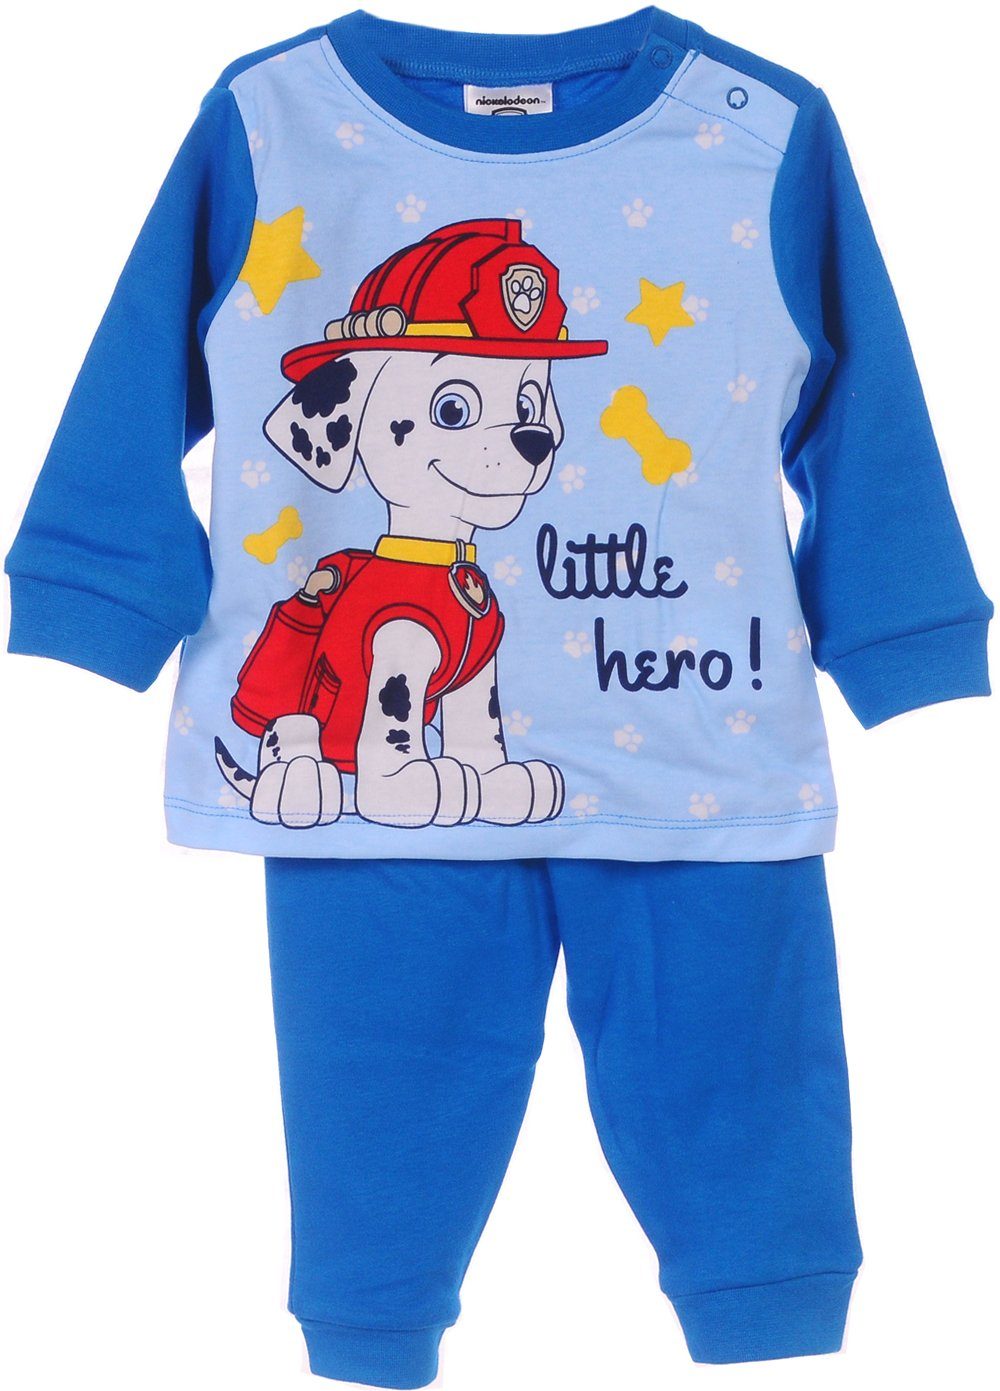 Pyjama Schlafanzug für Kinder Hose Langarmsihrt 86 92 98 104 110